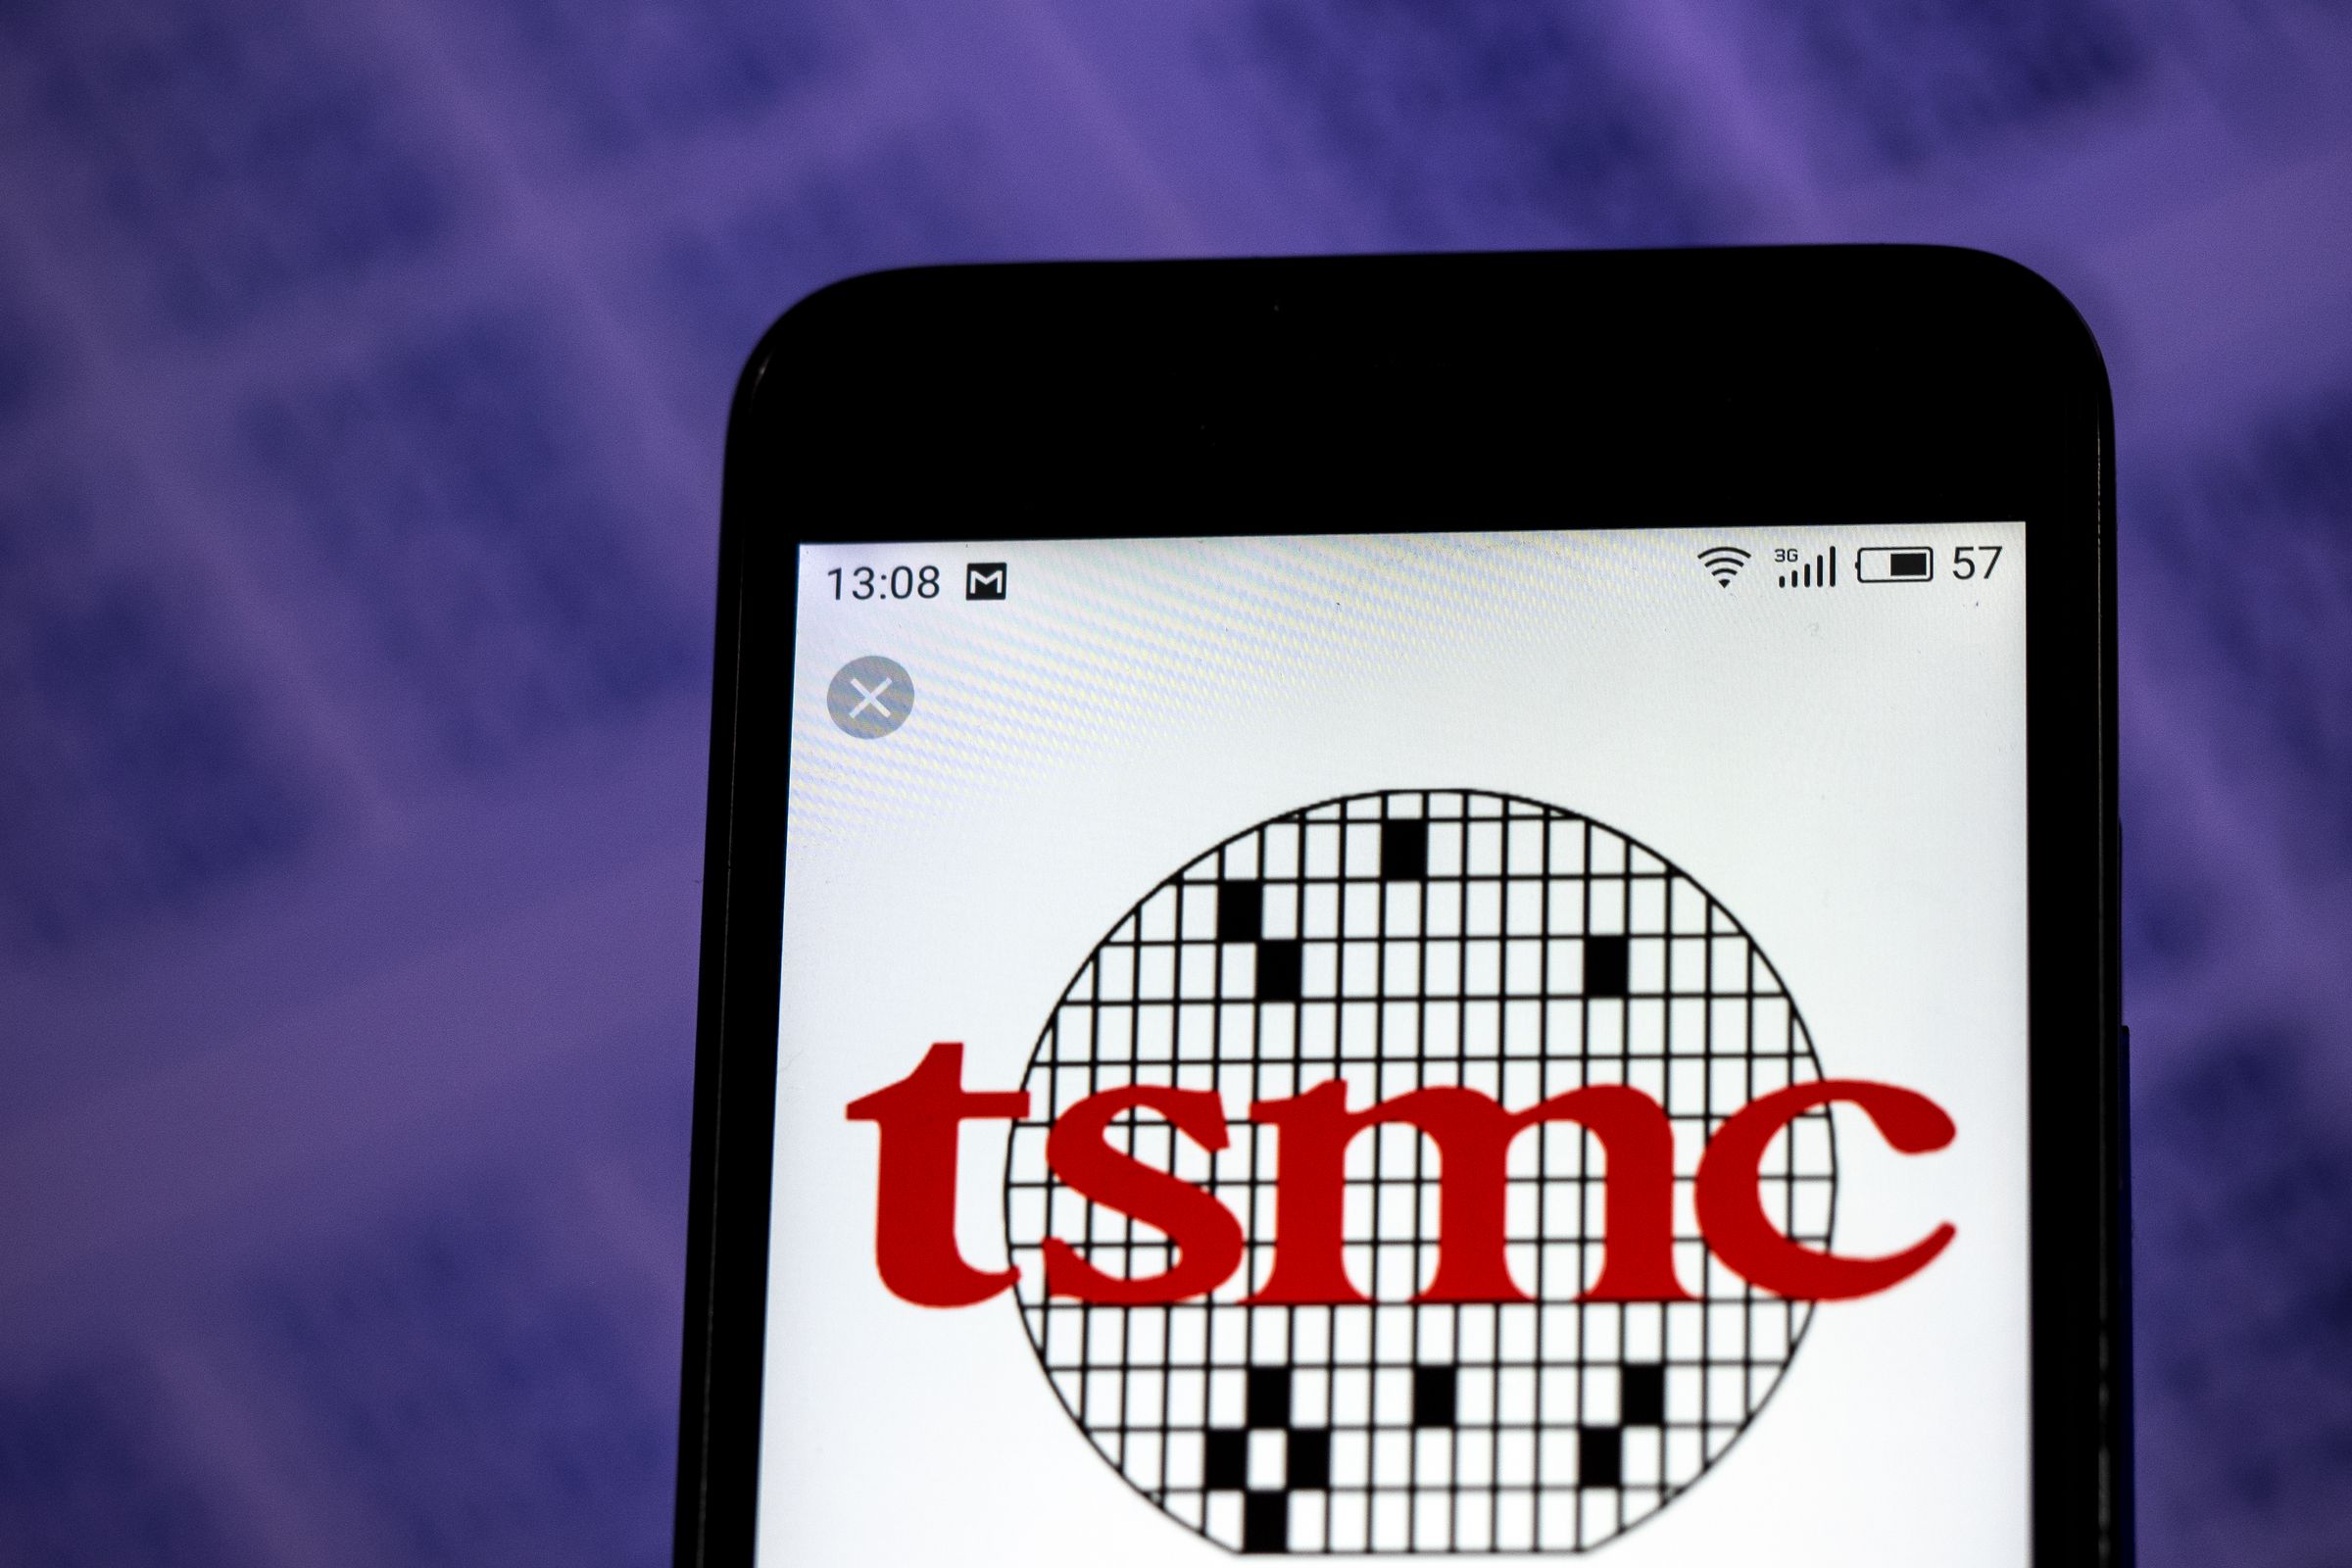 TSMC Semiconductor manufacturing company logo seen displayed